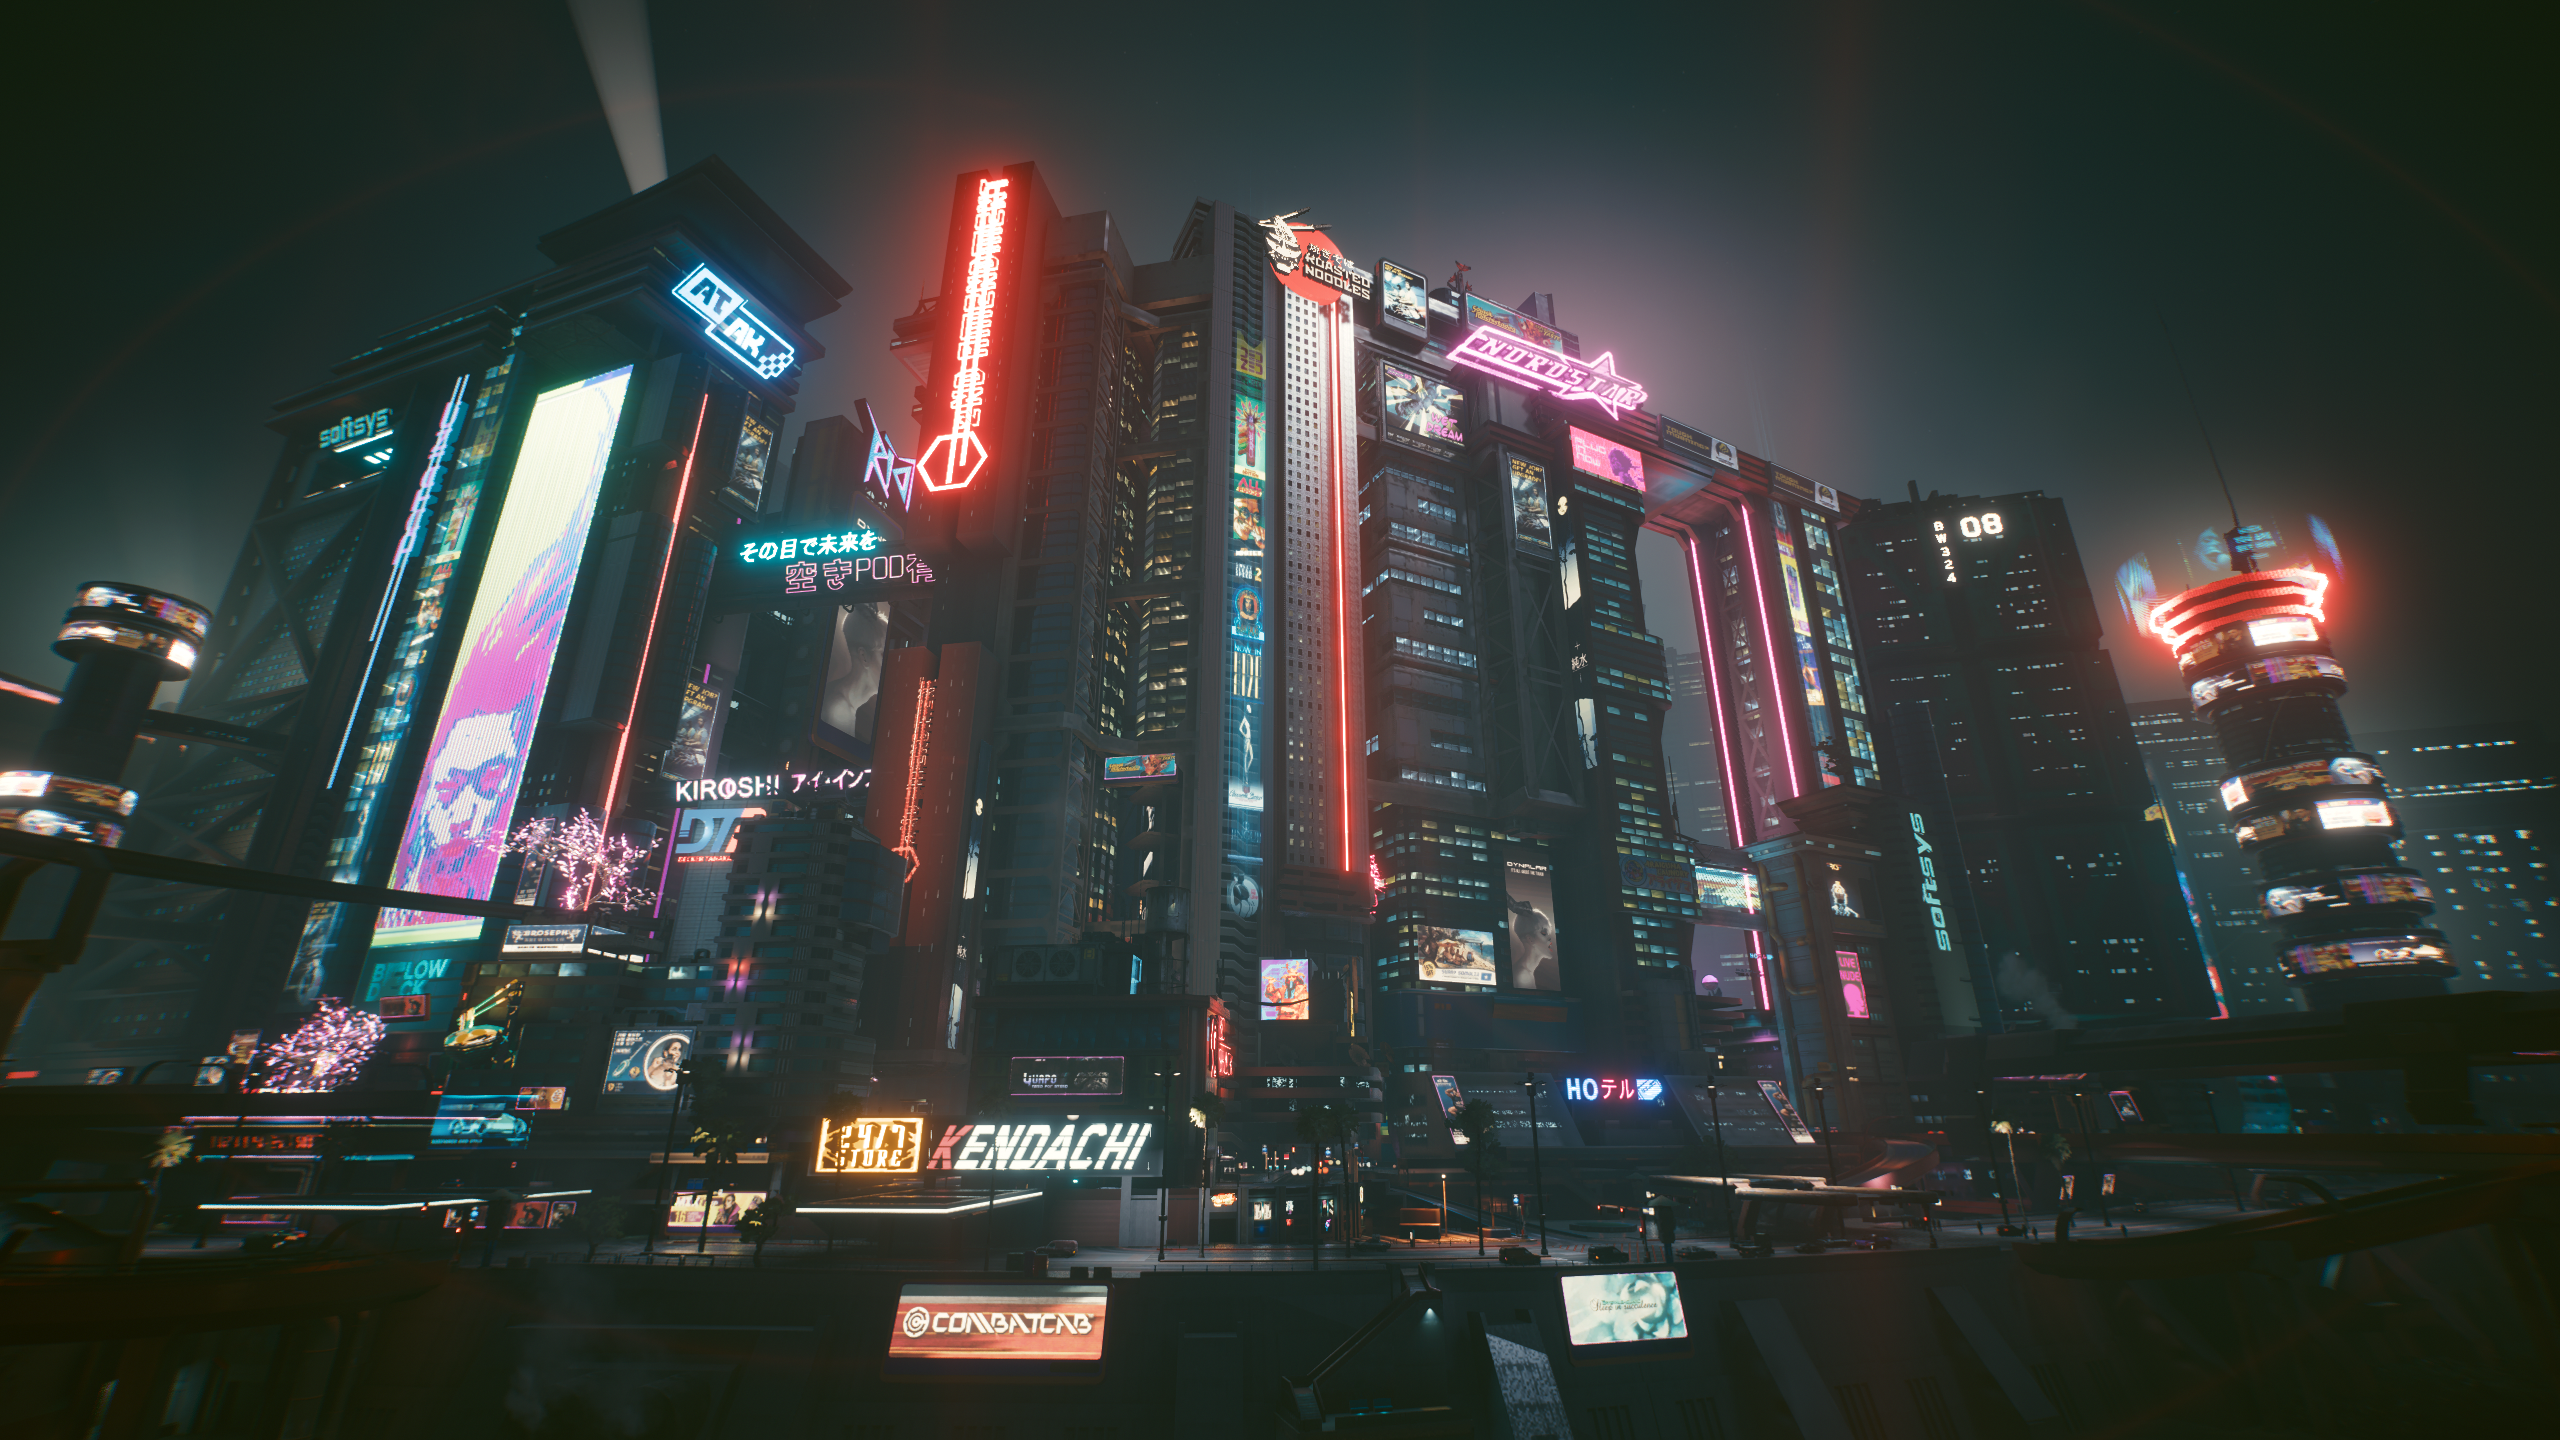 Steam Workshop::Cyberpunk 2077 Night City Live Wallpaper 1080p